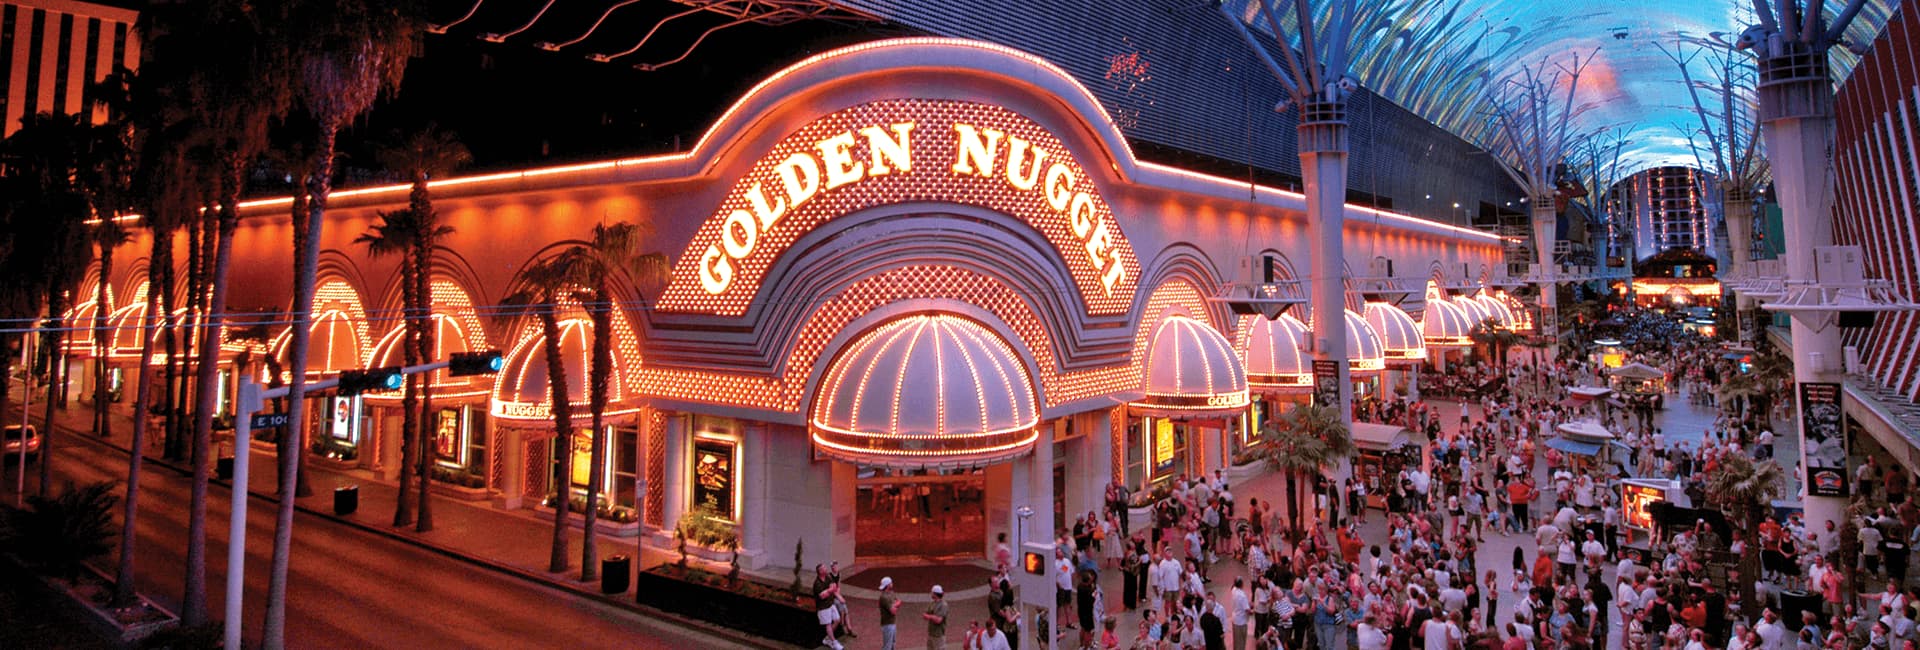 golden nugget casino online pa